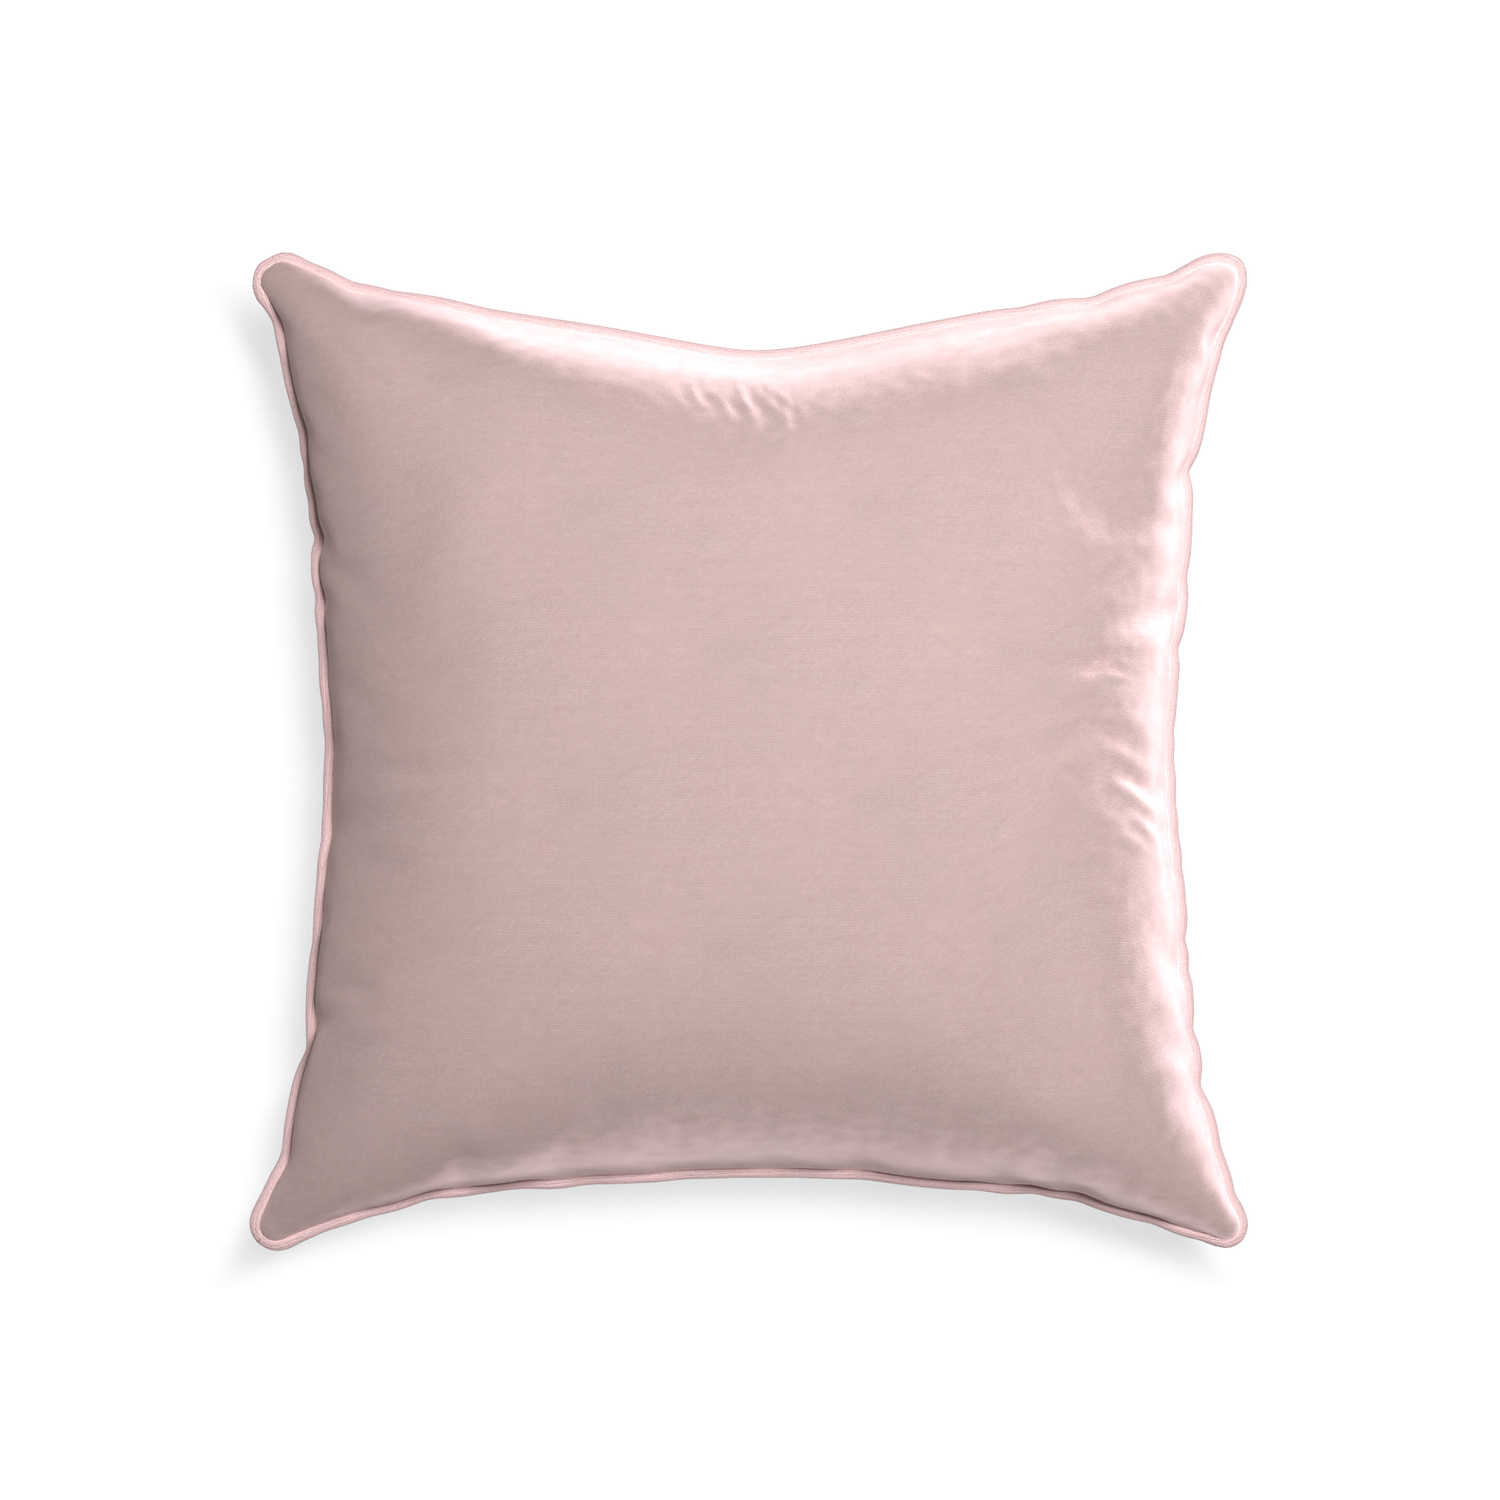 22-square rose velvet custom pillow with petal piping on white background